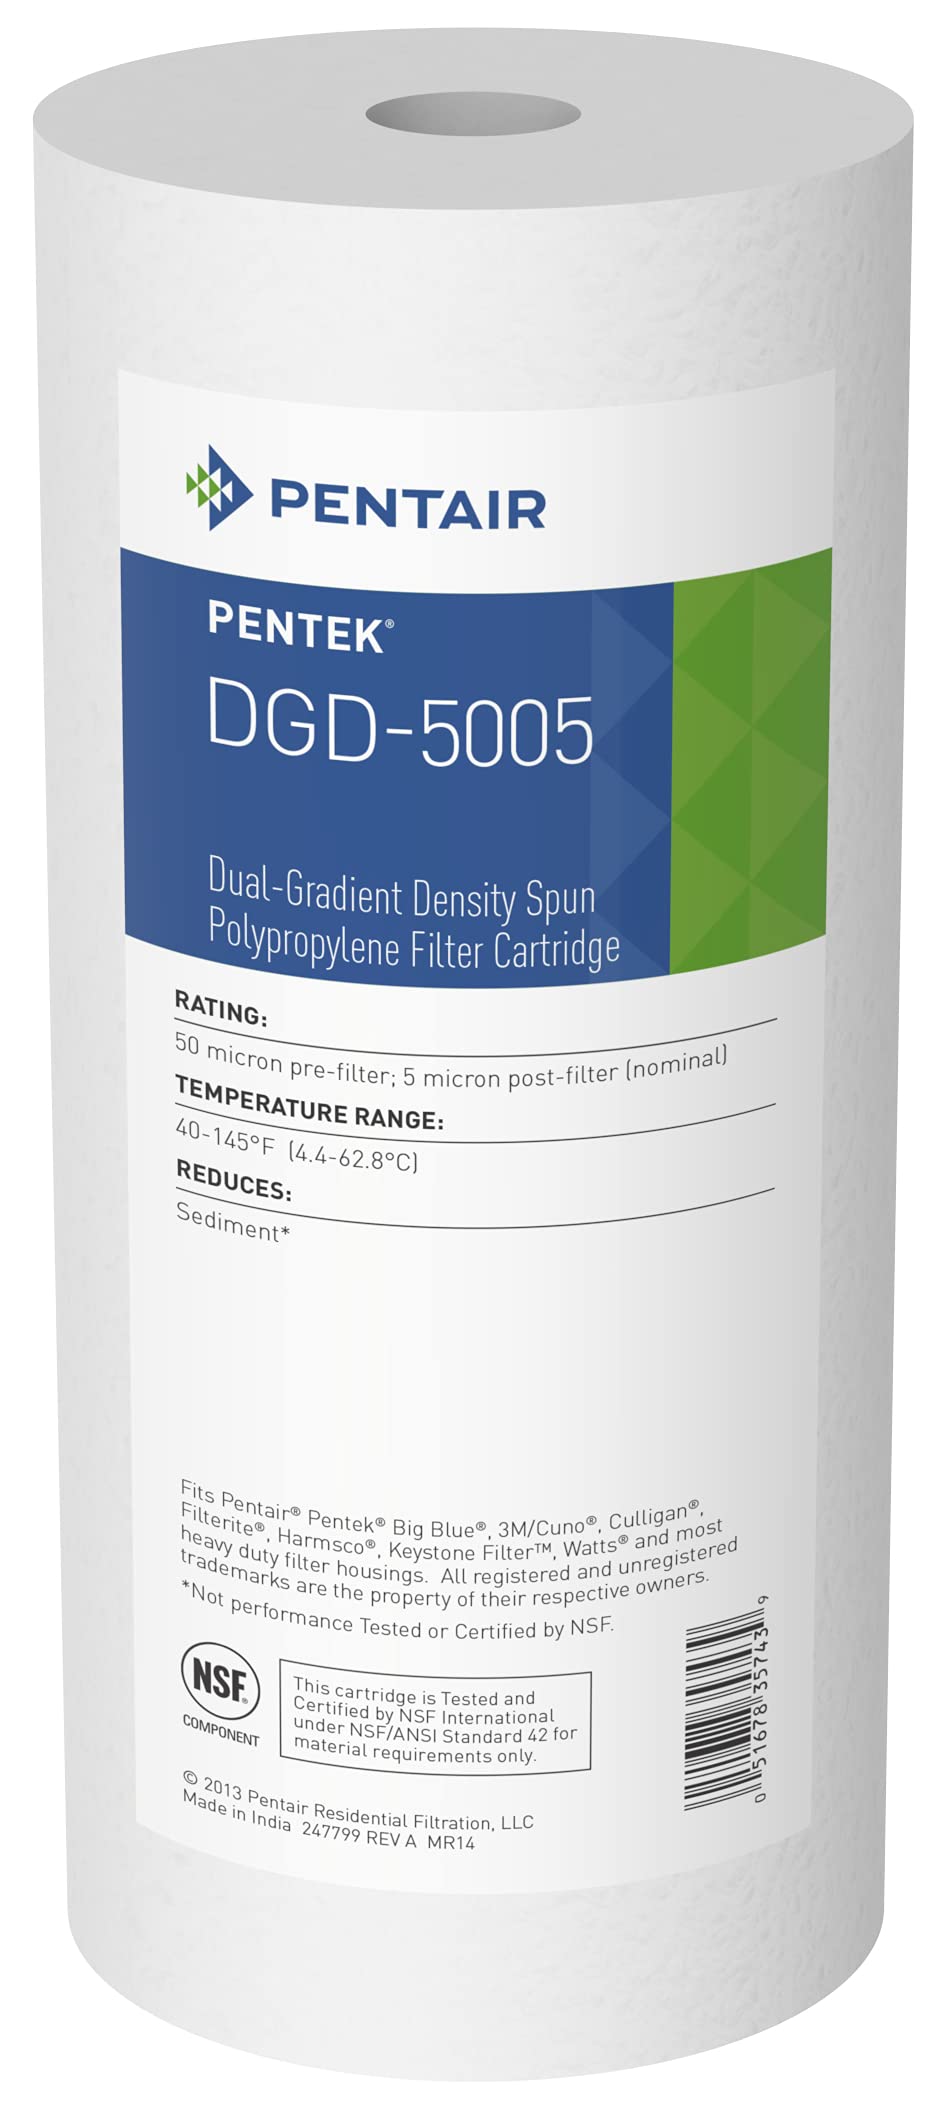  [AUSTRALIA] - Pentair Pentek DGD-5005 Big Blue Sediment Water Filter, 10-Inch, Whole House Heavy Duty Dual-Gradient Density Spun Polypropylene Replacement Filter Cartridge, 10" x 4.5", 5 Micron Pack of 1